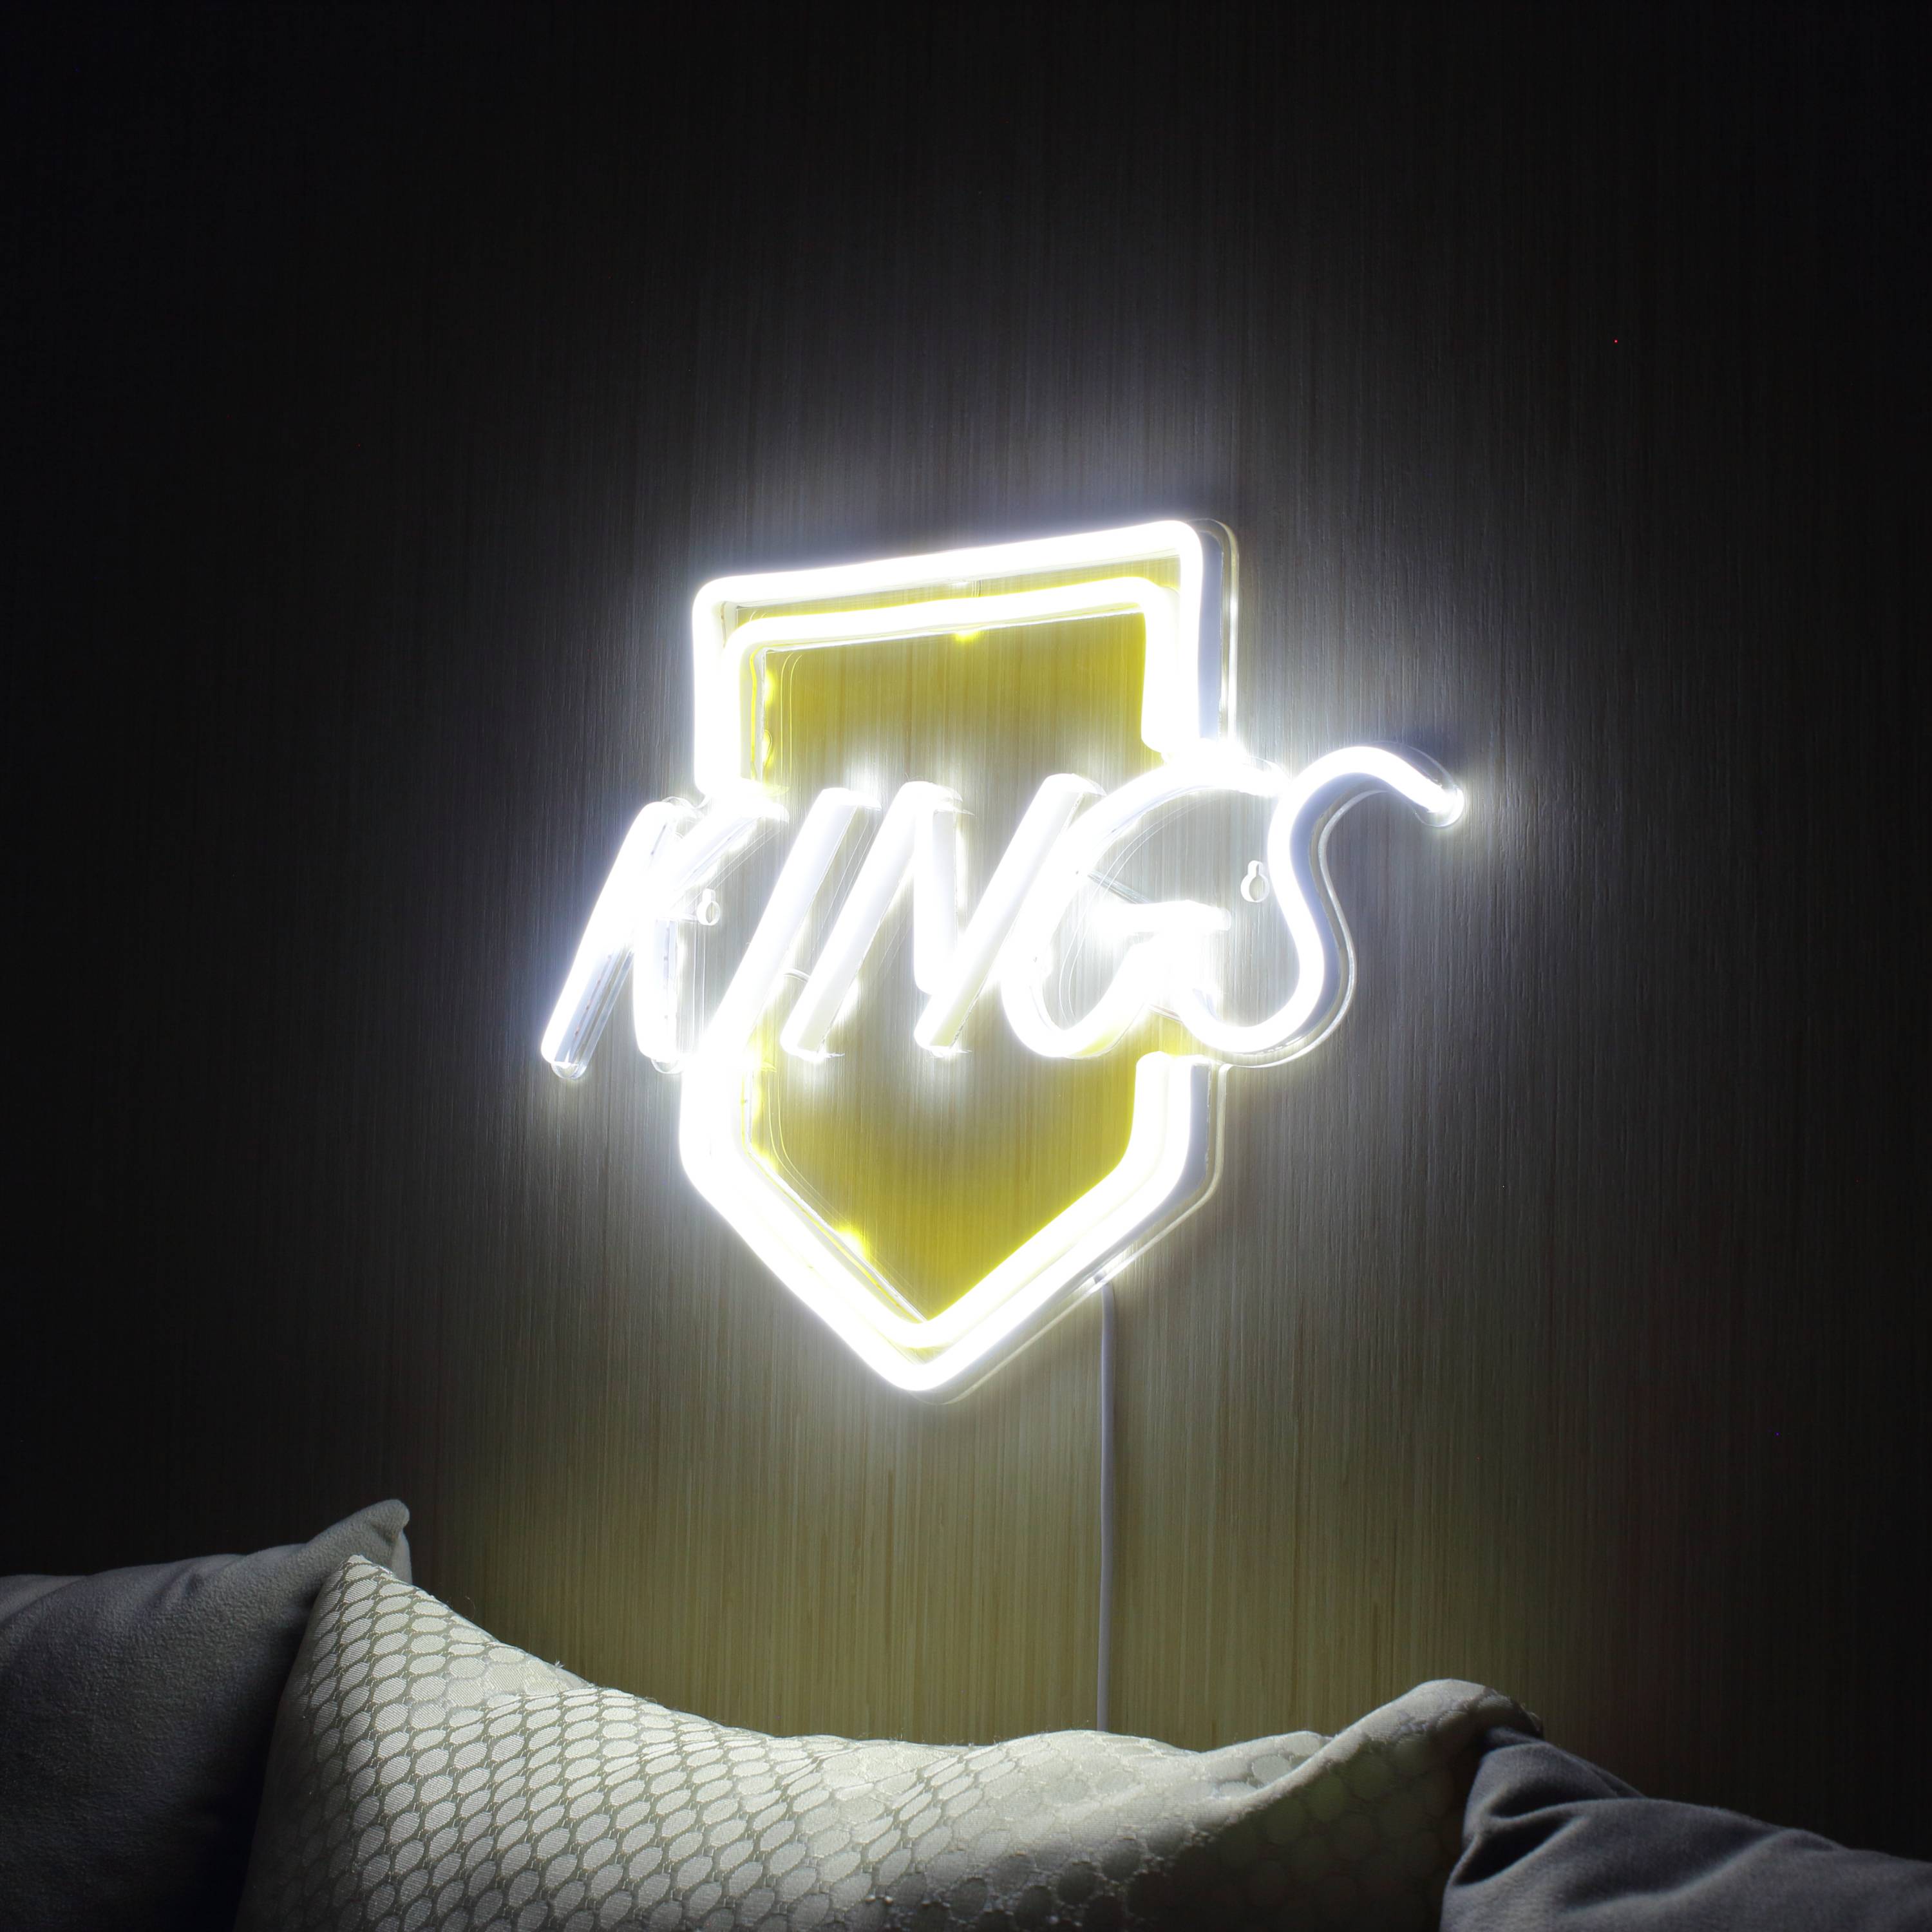 Kings still adjusting to new LED lighting - LA Kings Insider